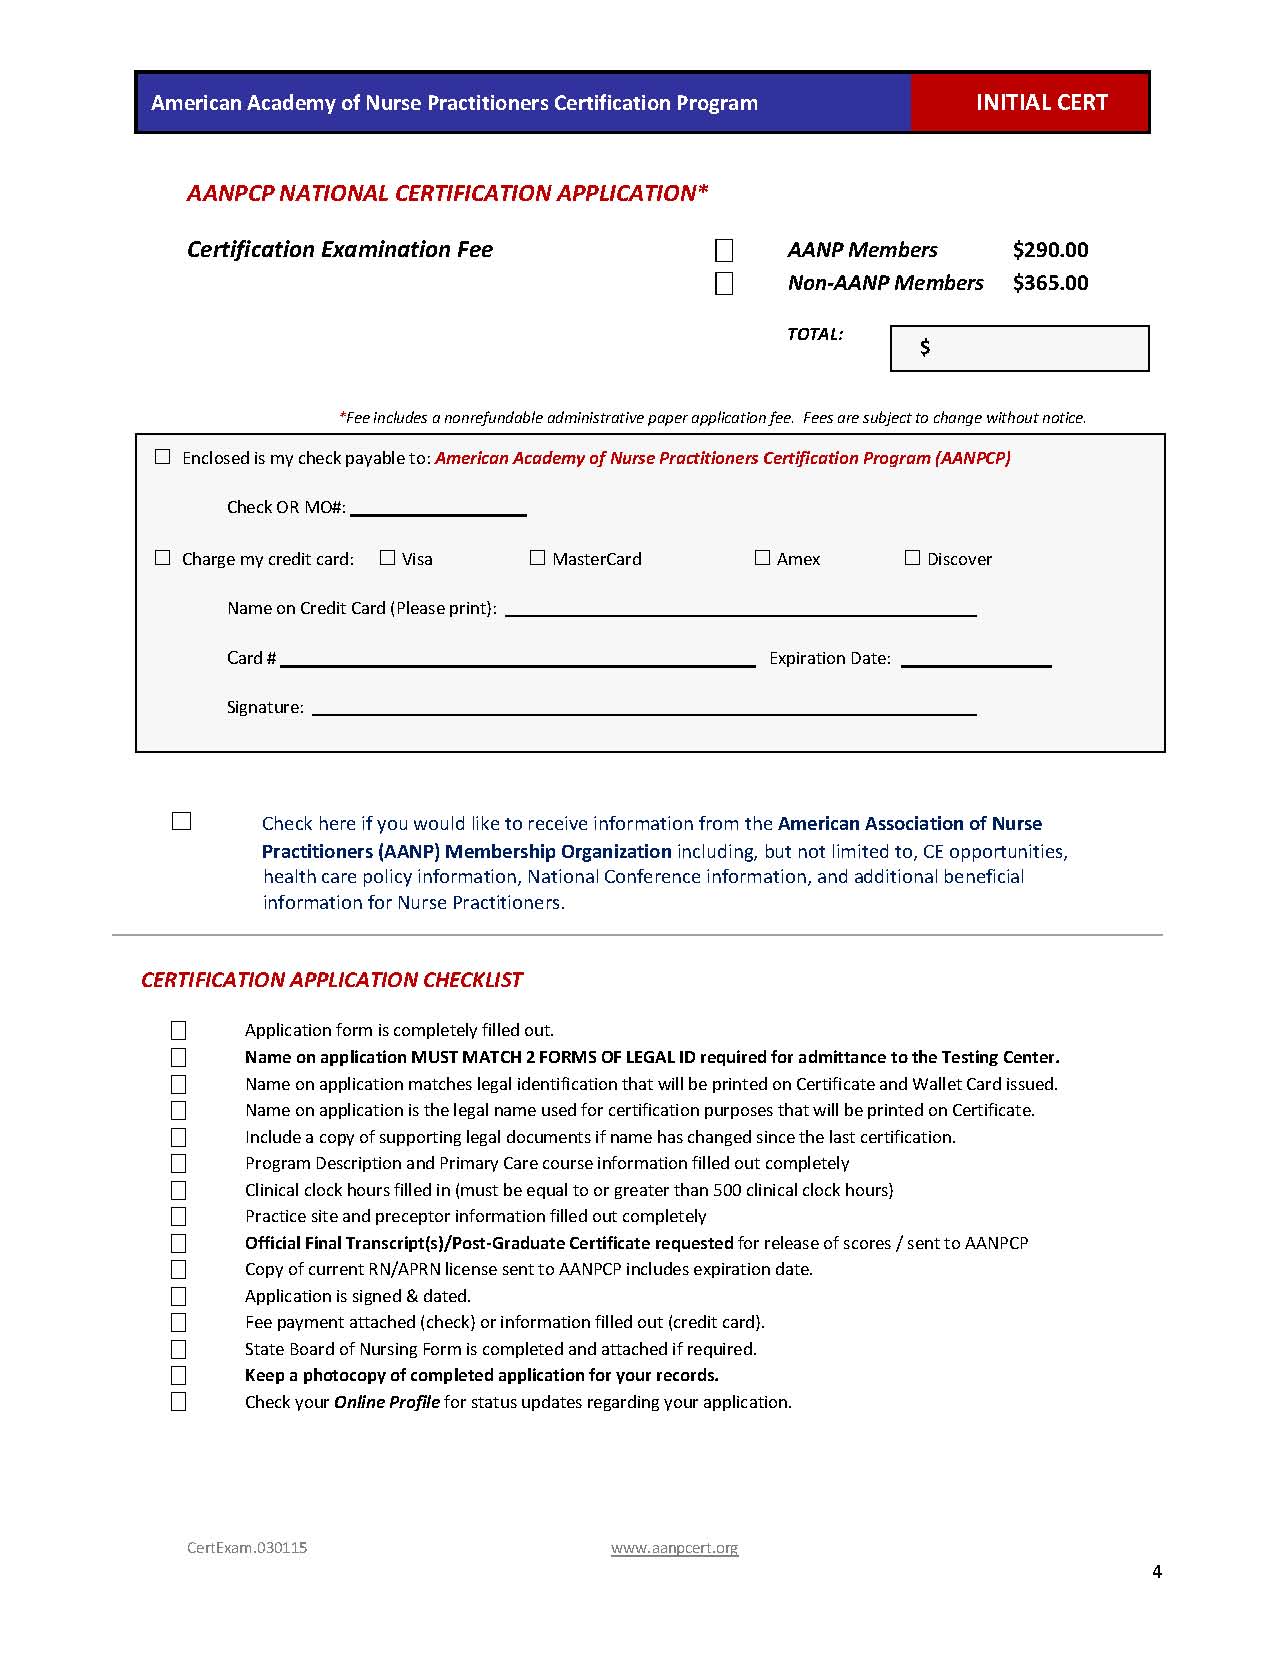 AANP Certification Exam App_Page_4.jpg